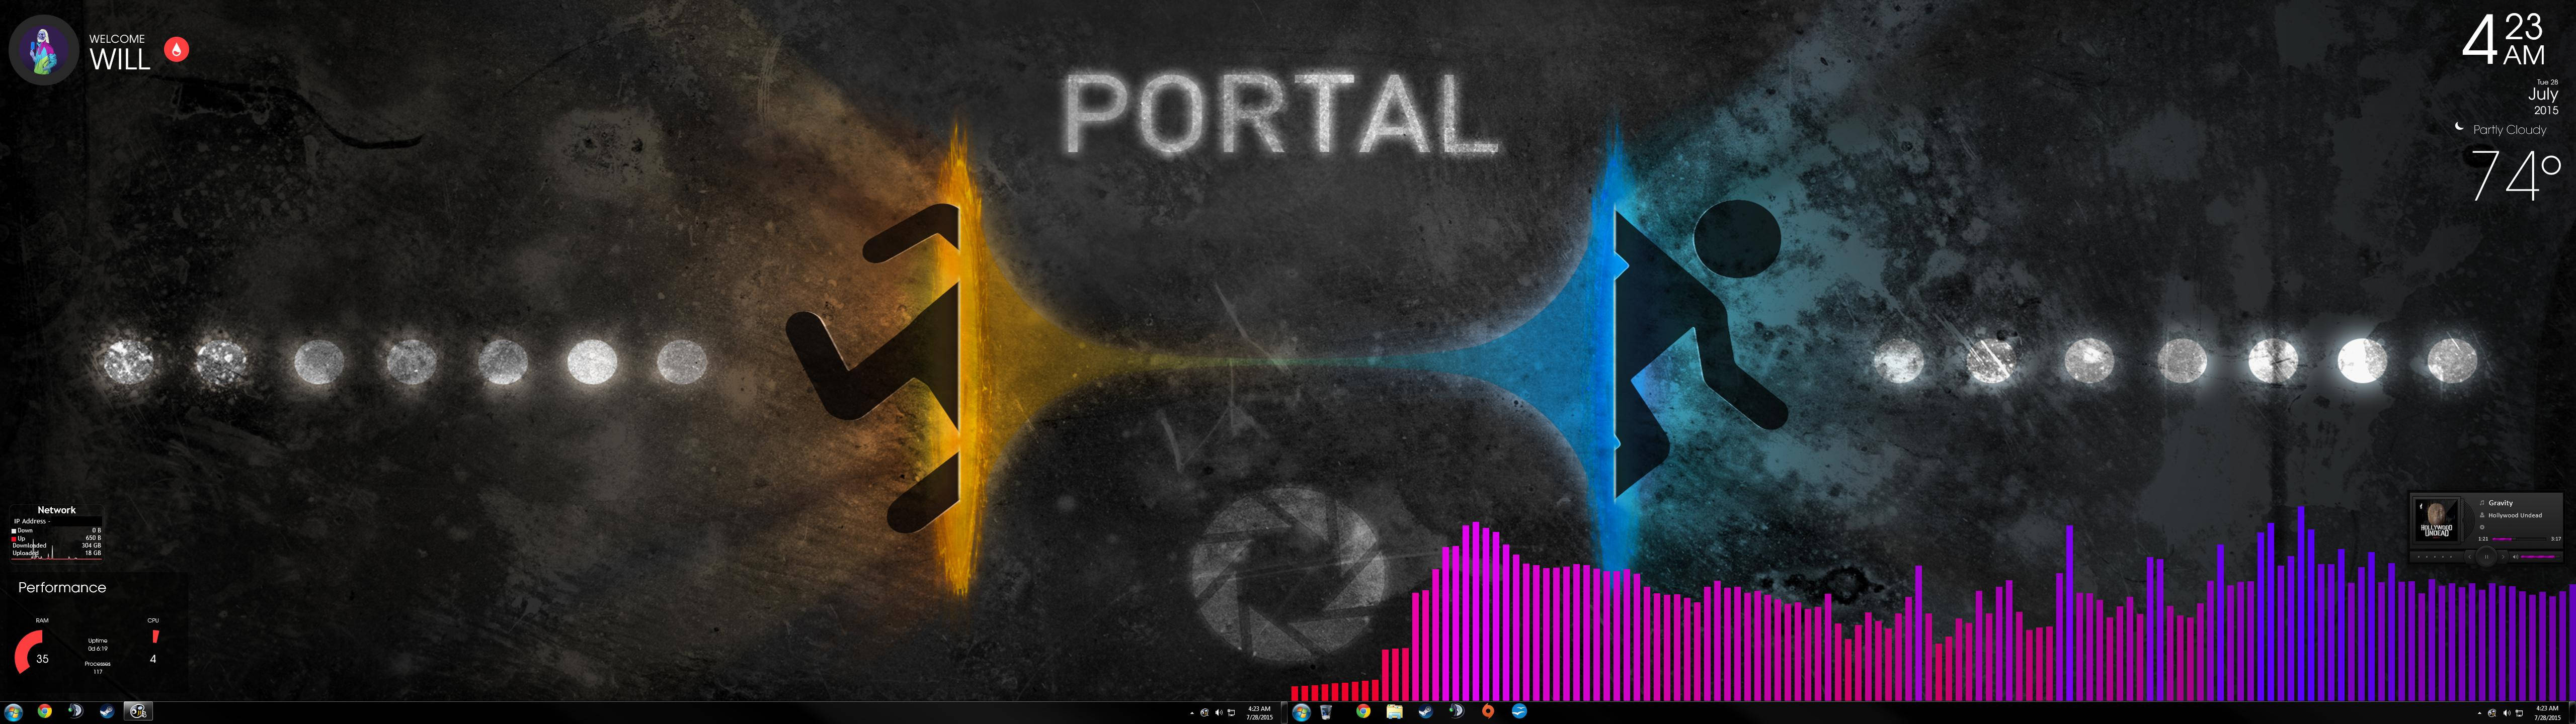 Dual Man Portal Background